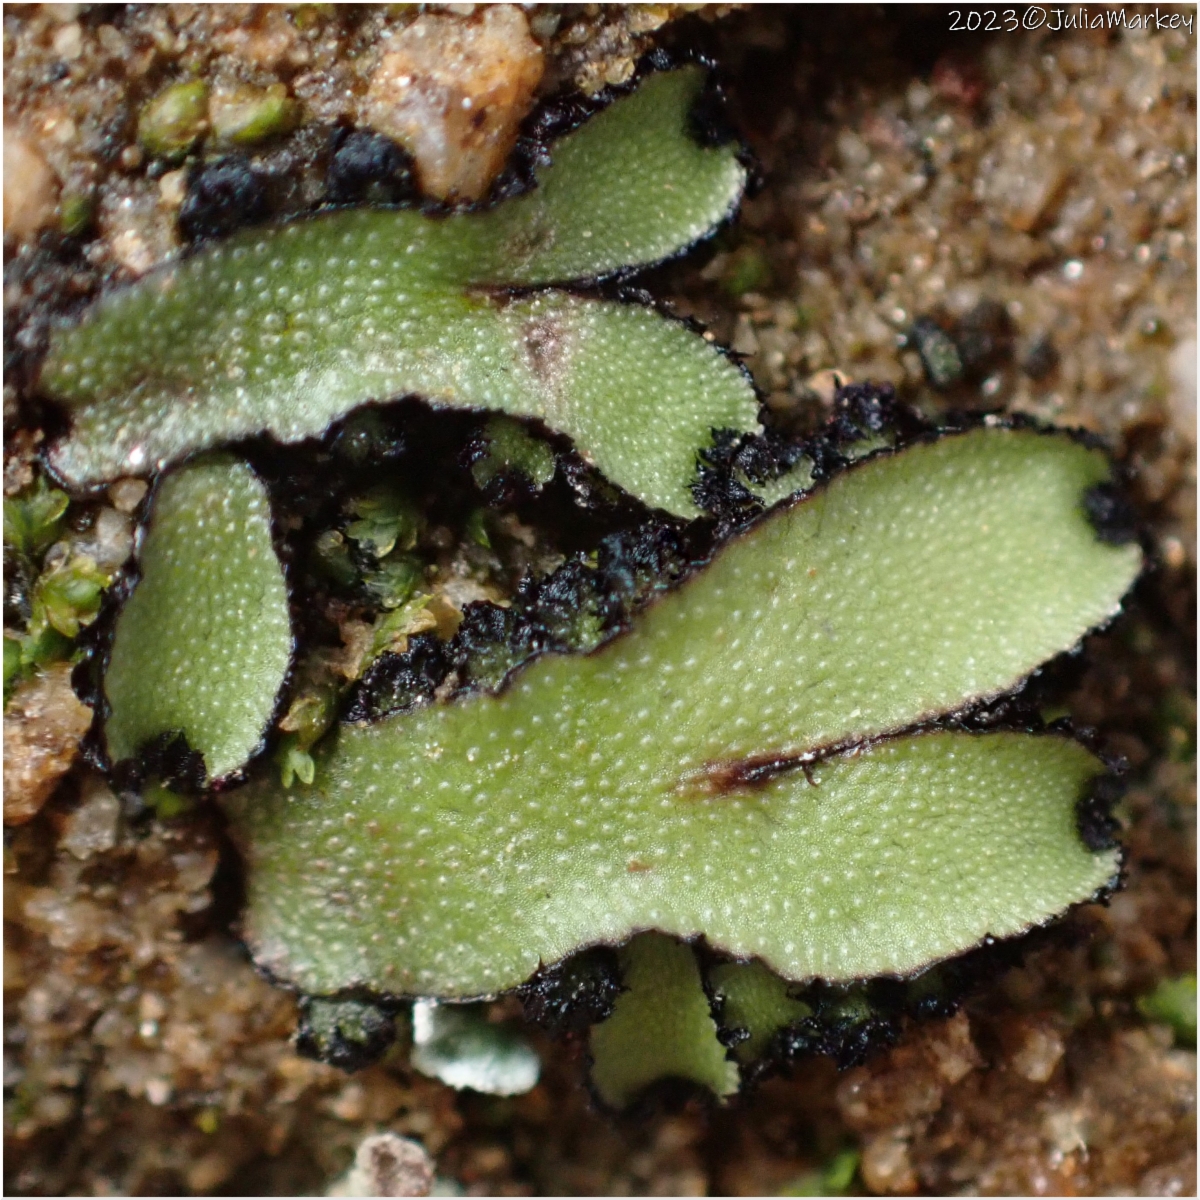 Targionia hypophylla